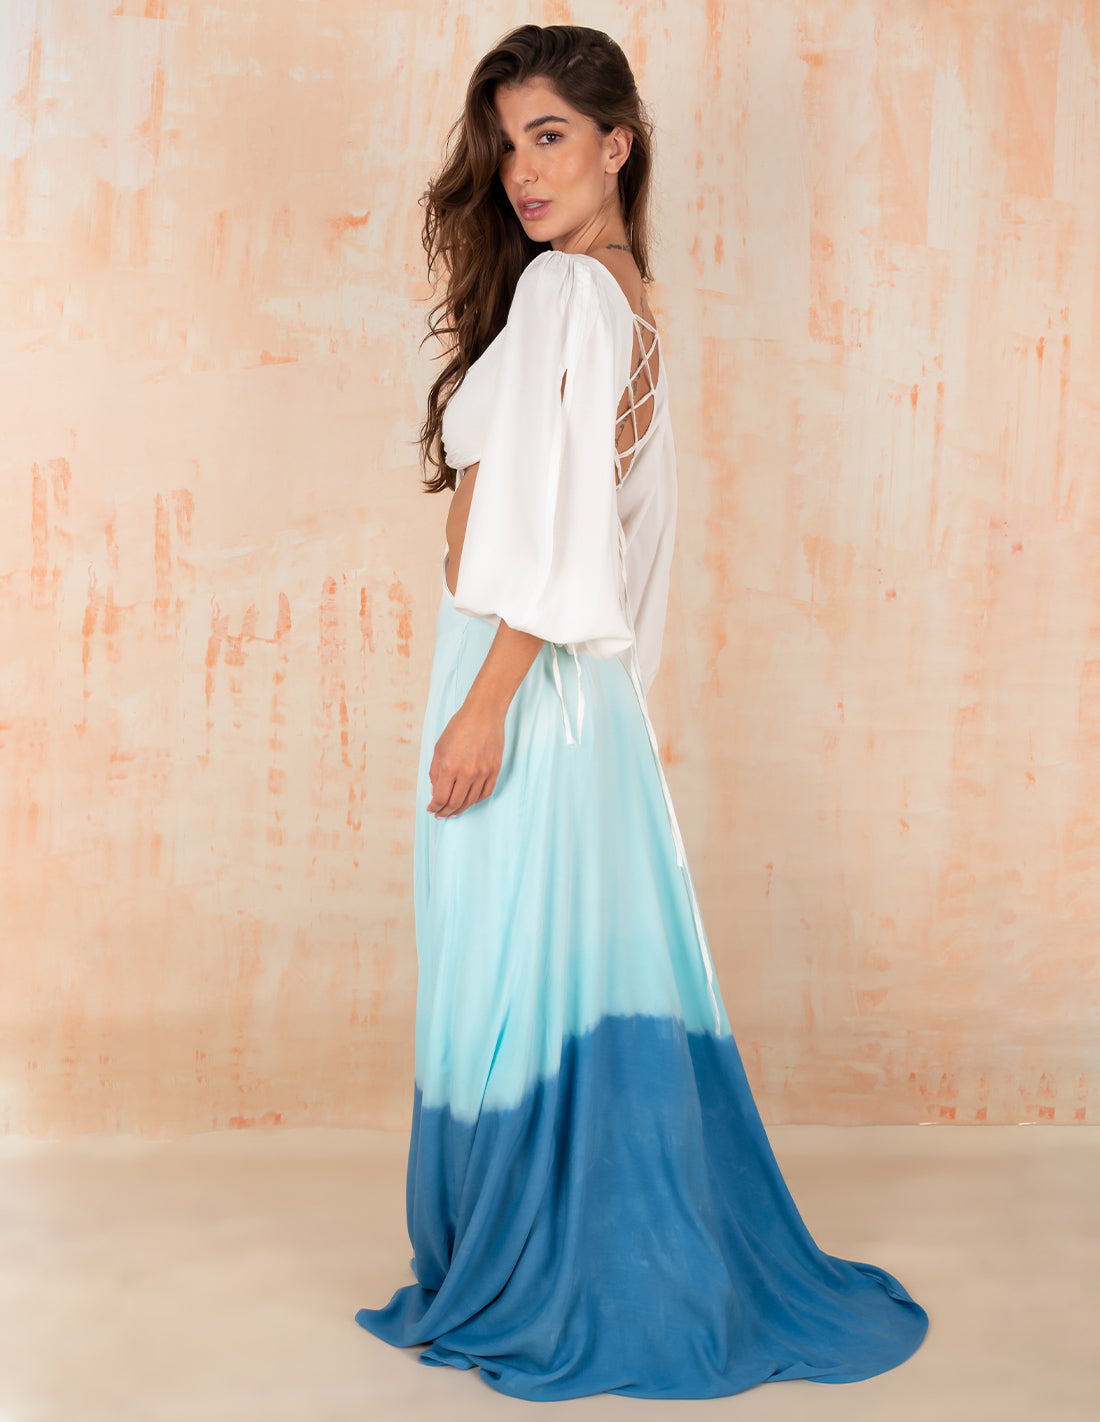 Guajira Dress Turquoise + Oil Cristal + Ivory. Hand-Dyed Dress In Turquoise + Oil Cristal + Ivory. Entreaguas